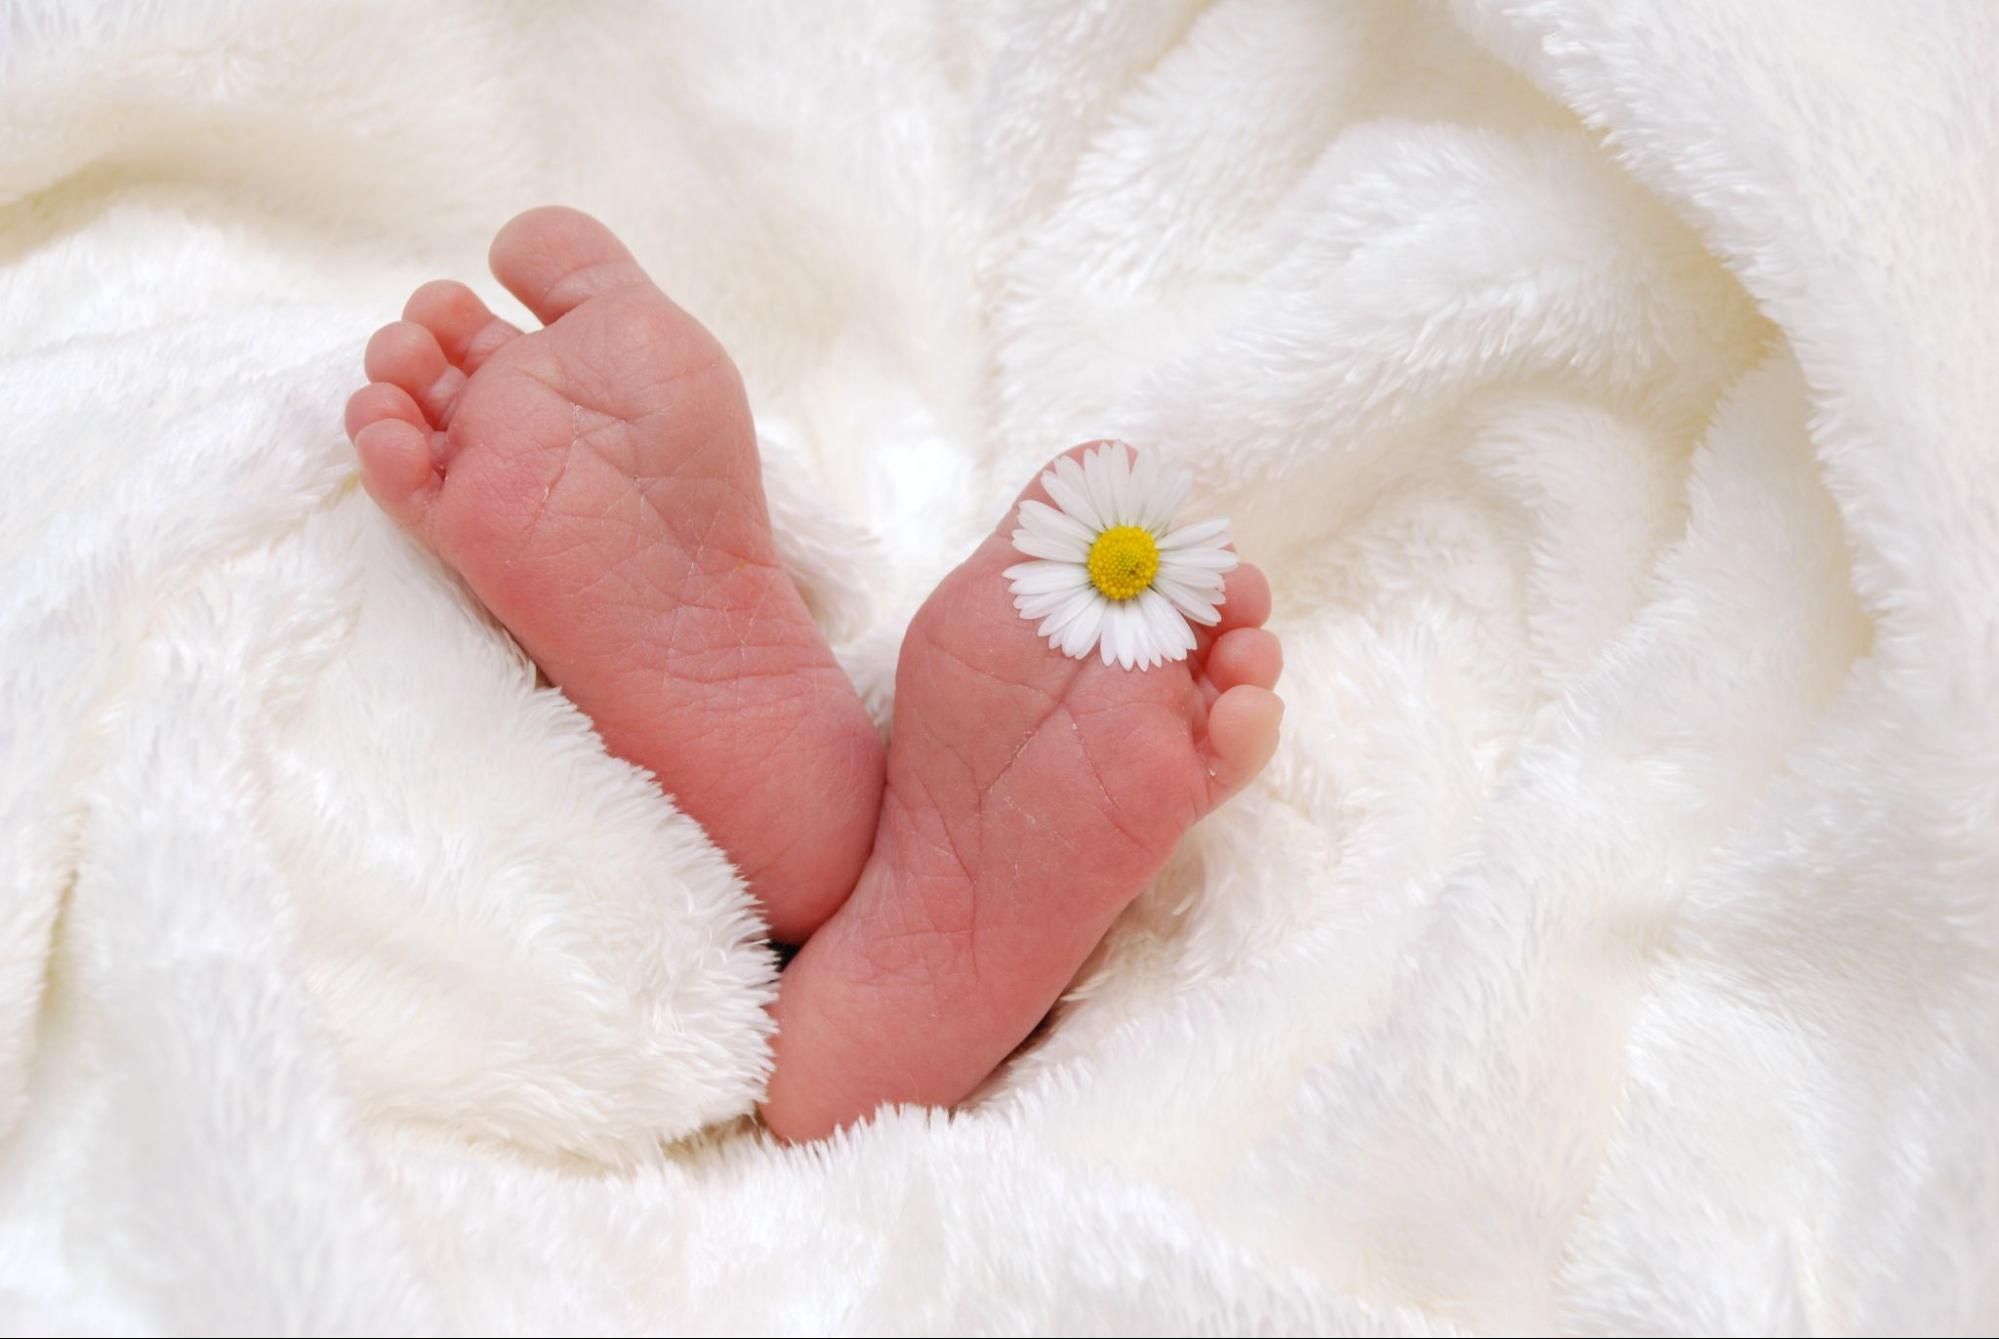 Prevention Tips for Baby Feet That Turn Purplish-Blue